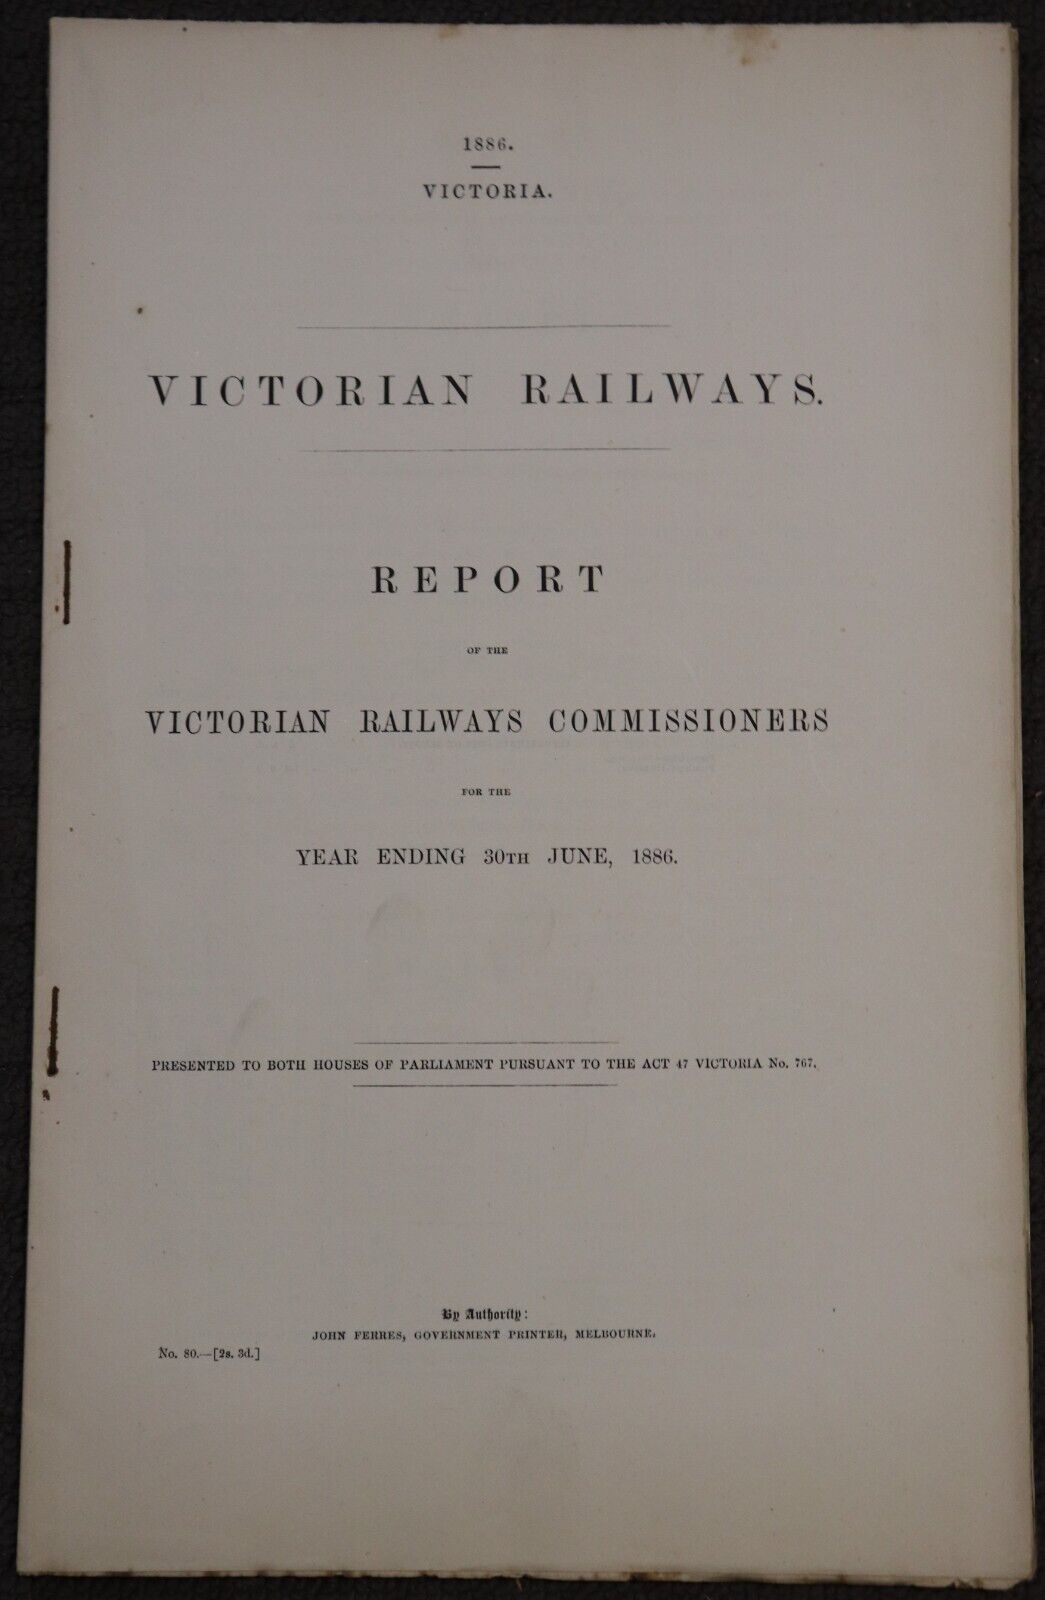 Parliamentary Papers: Victorian Railways - 1880's - Australia Train Books